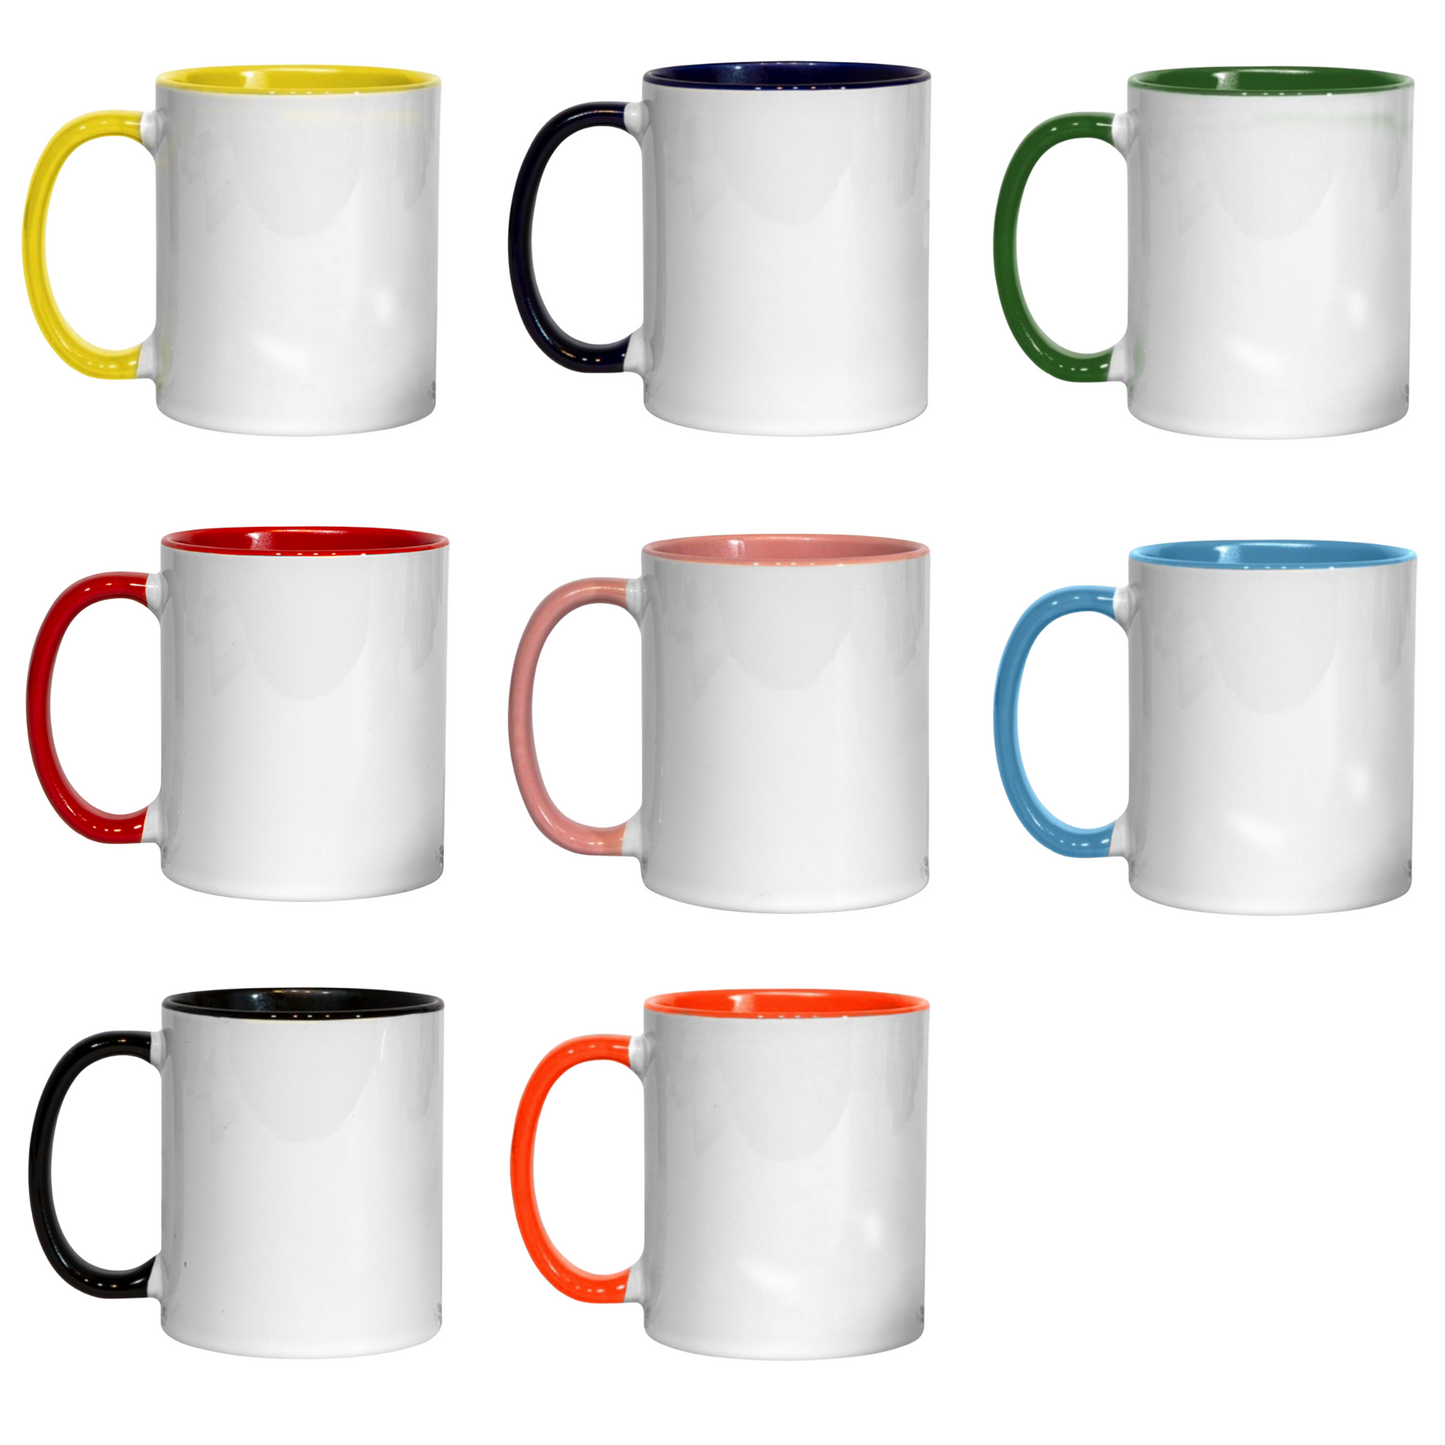 Love Sucks Mug - Coloured Handle